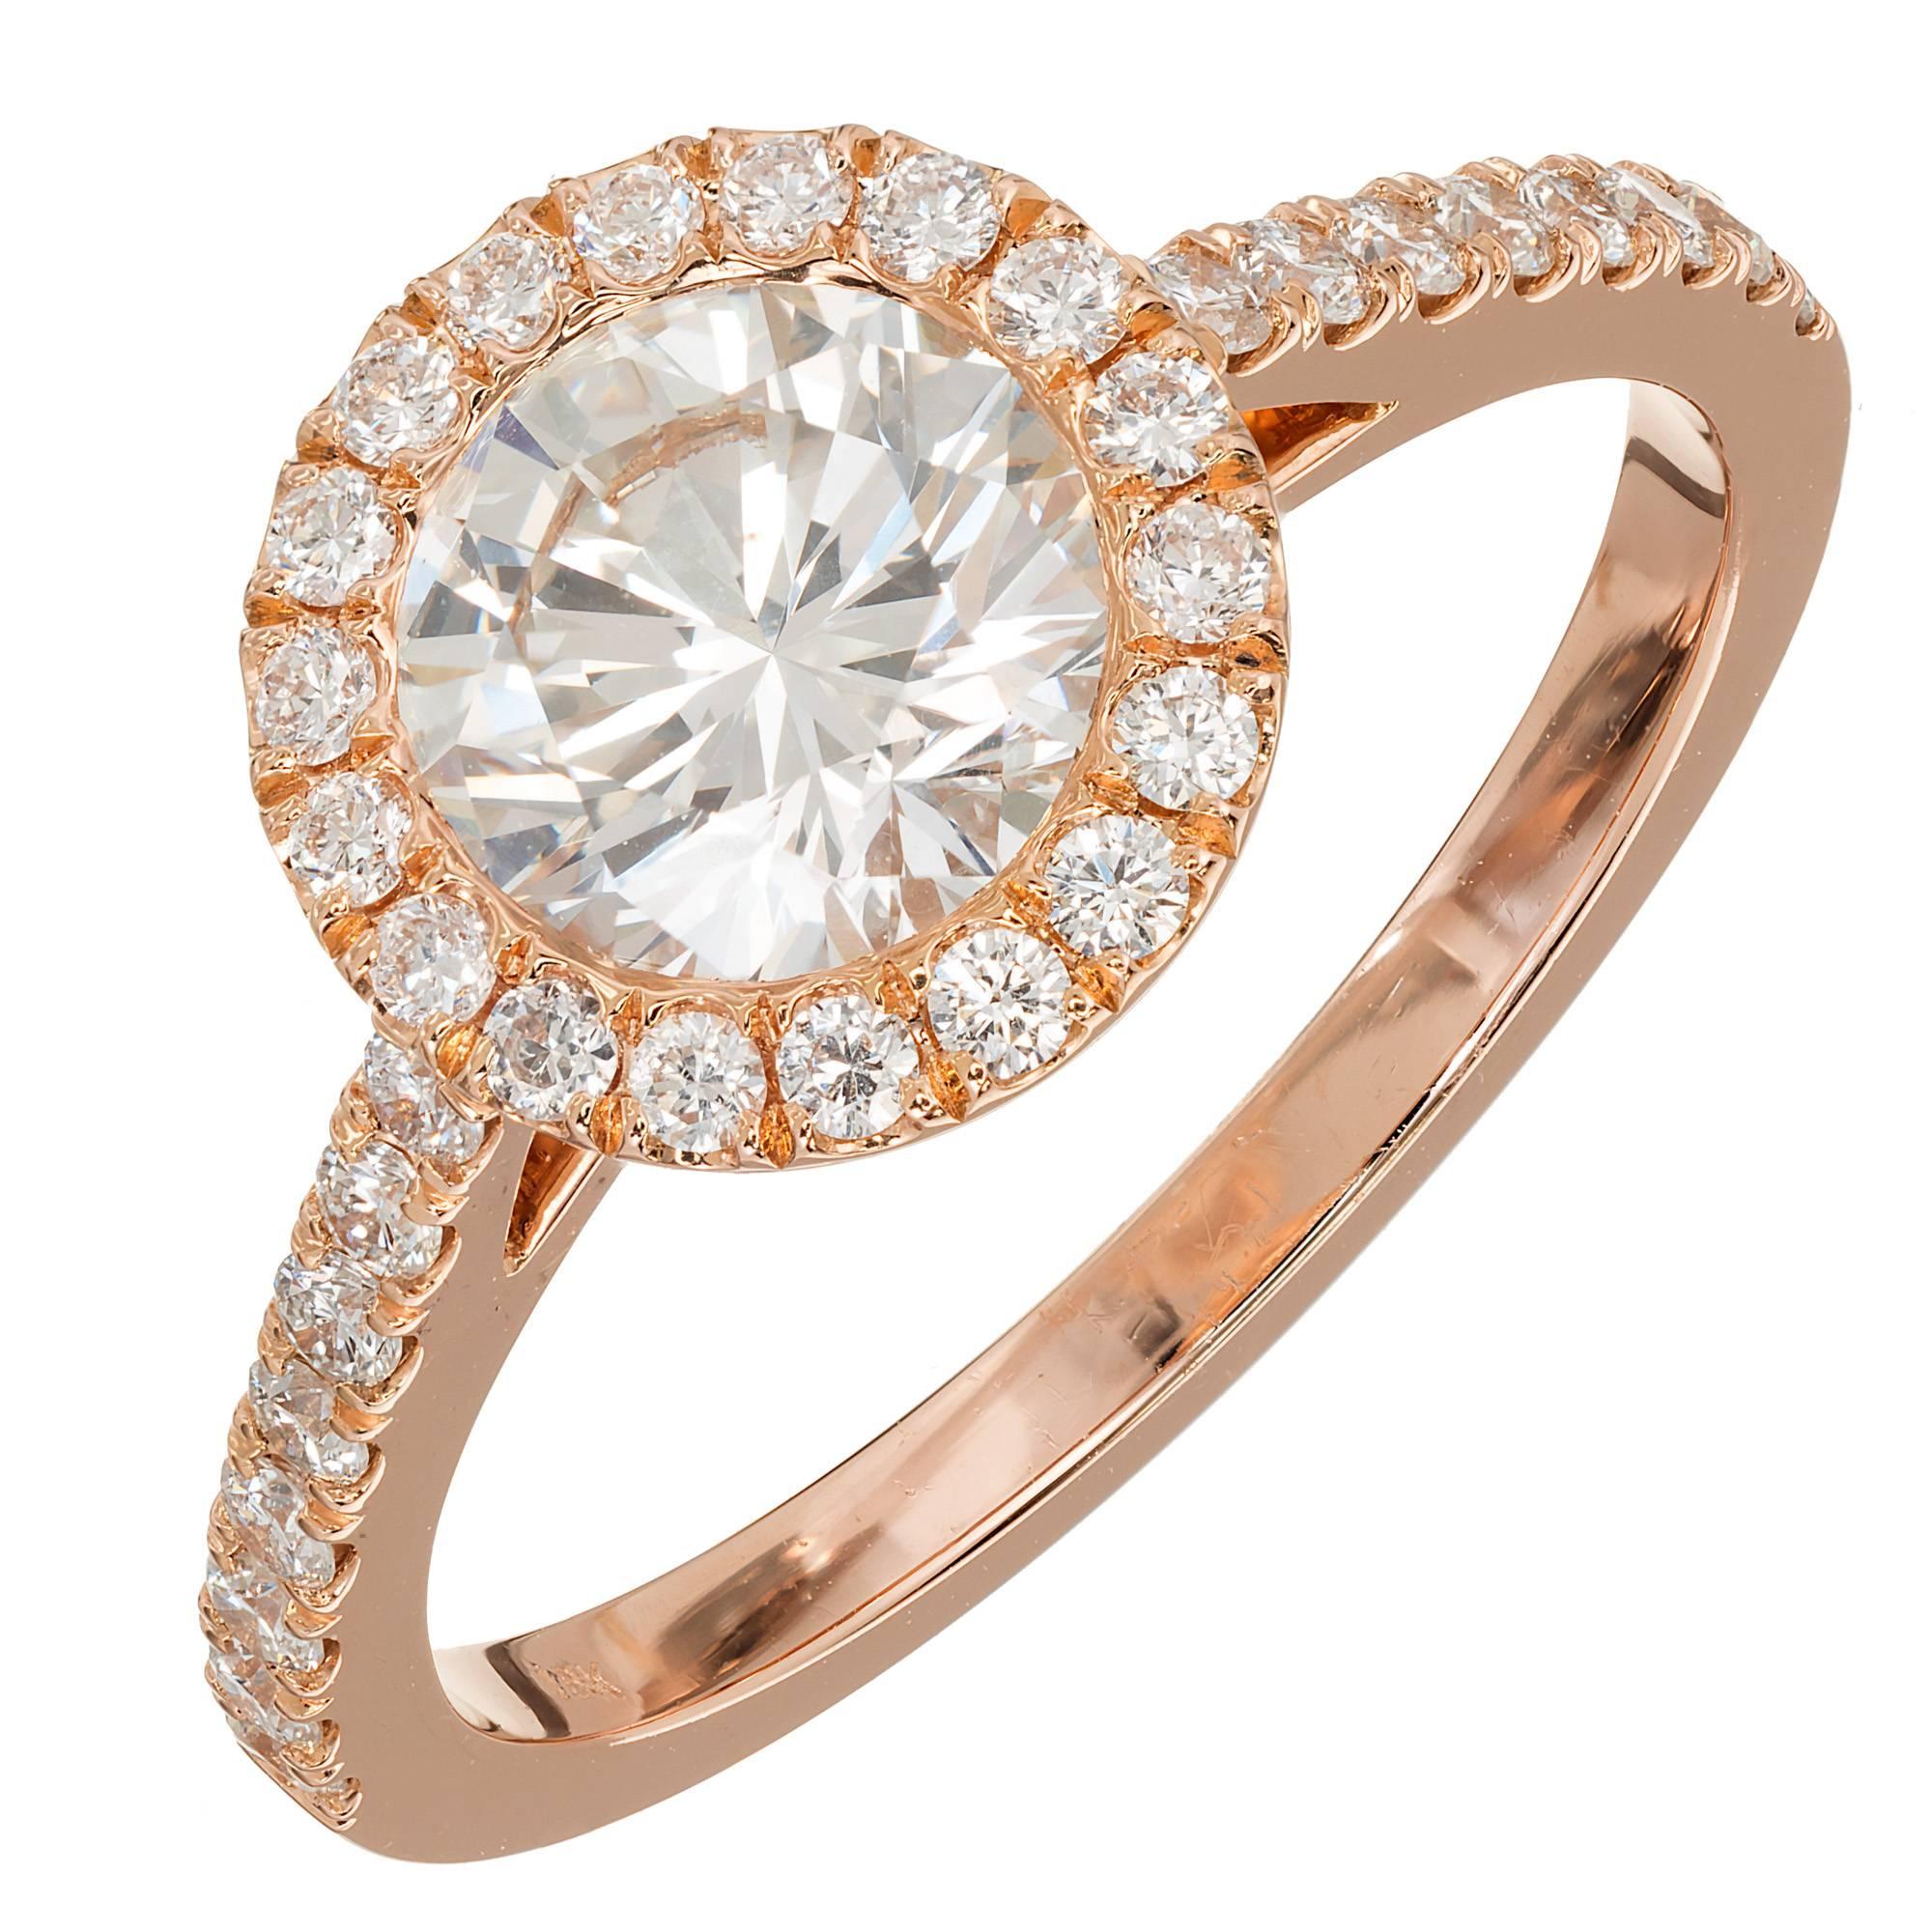 Peter Suchy Gia Certified 1.06 Carat Diamond Halo Rose Gold Engagement Ring